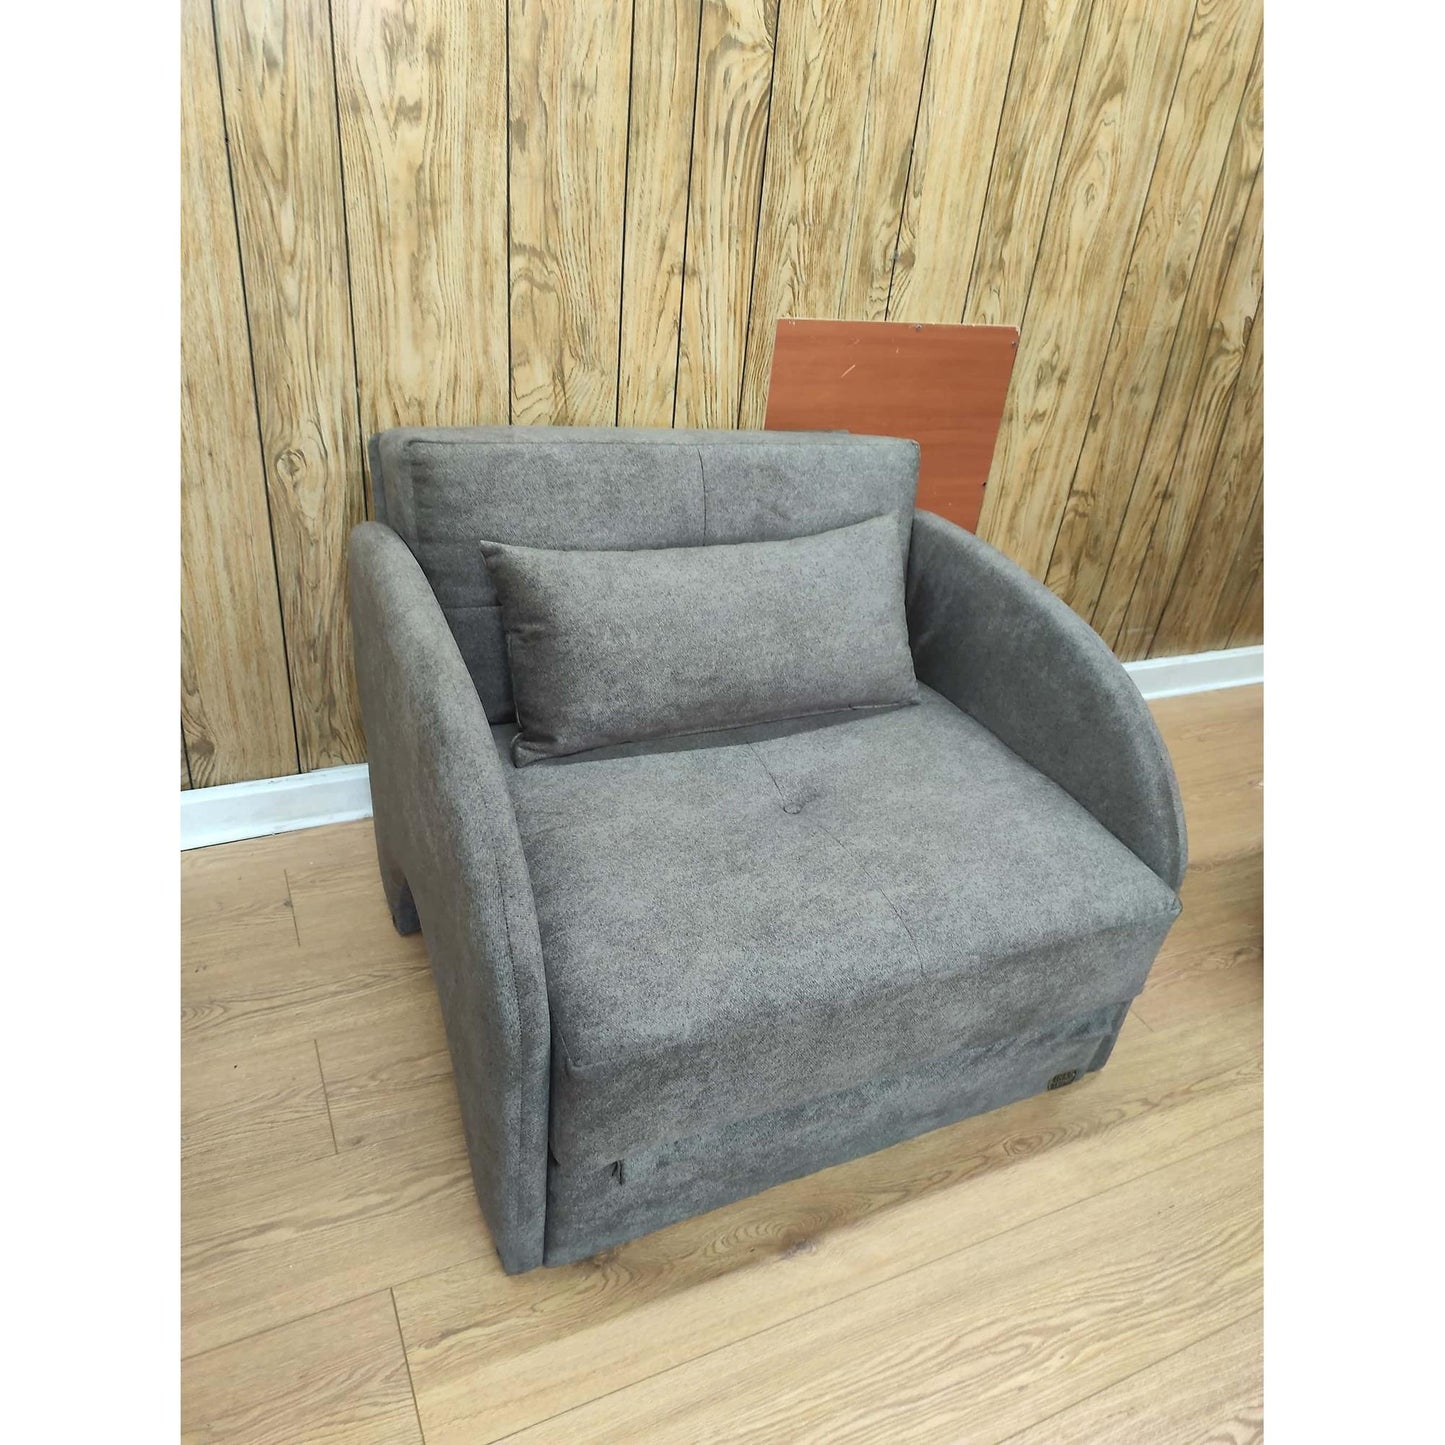 Easy-Flip Deluxe Chair Bed in Brown Fabric